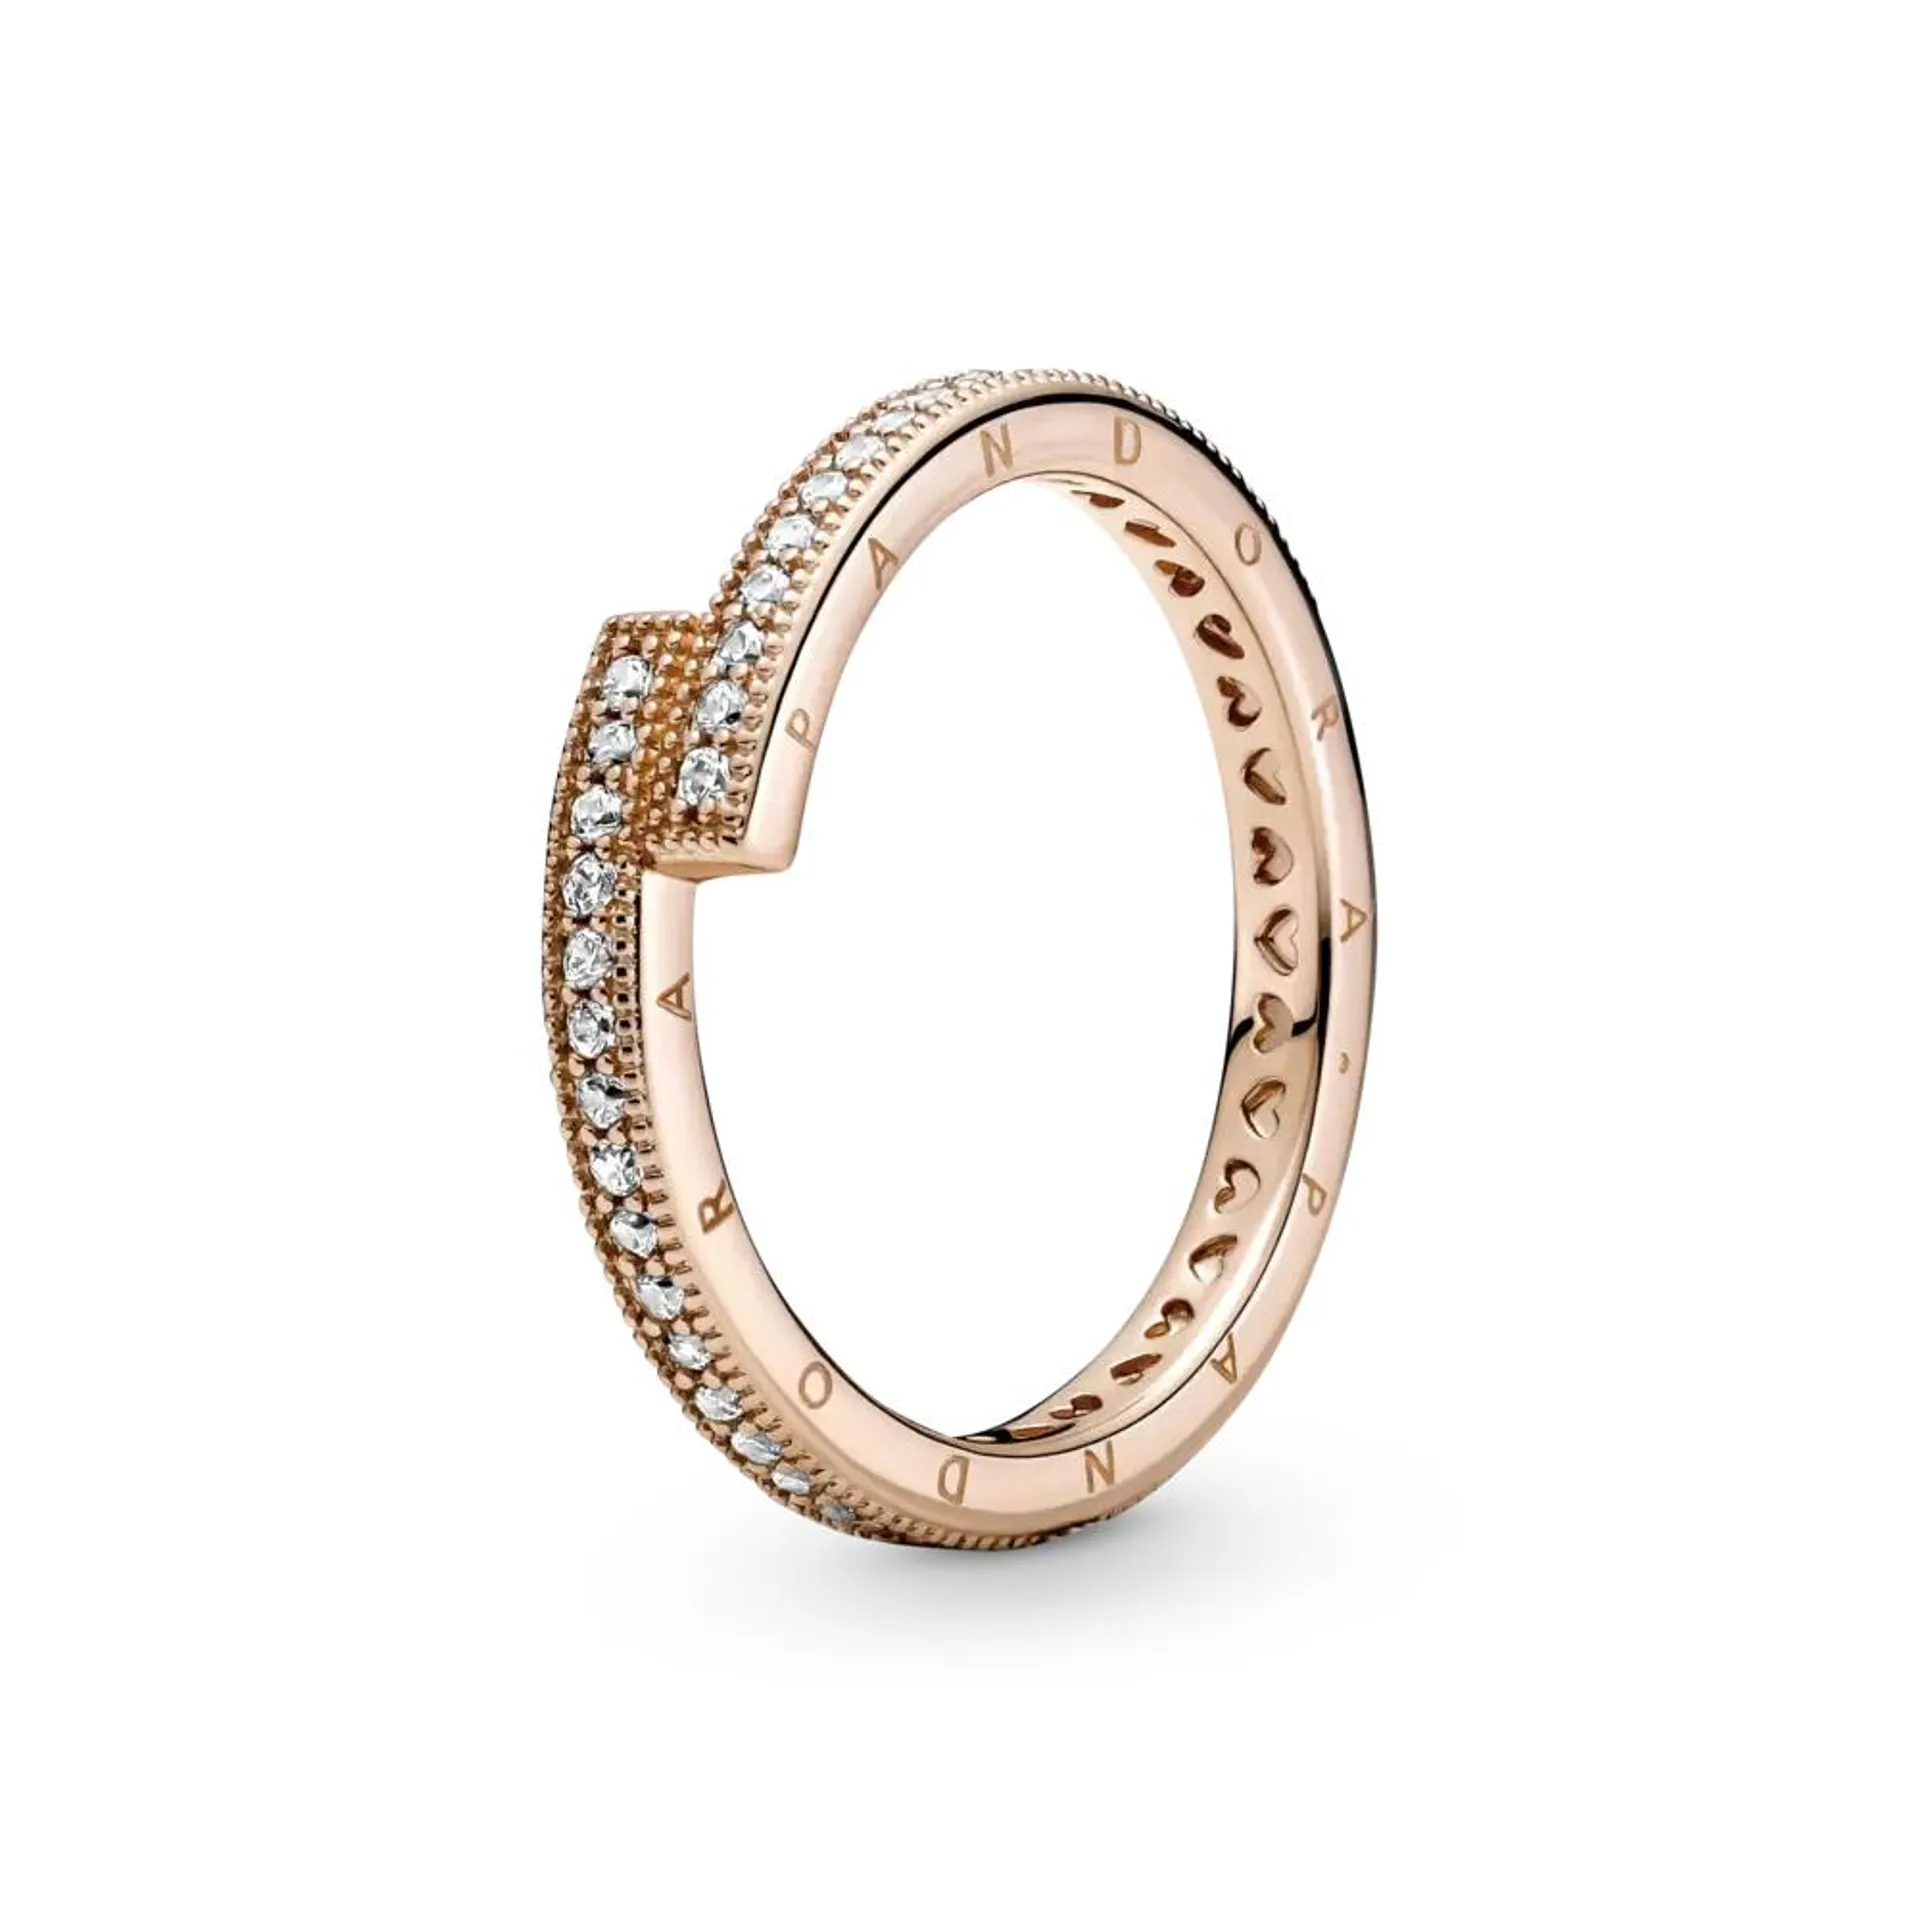 Inel cu model suprapus strălucitor placat cu aur roz de 14k, Pandora